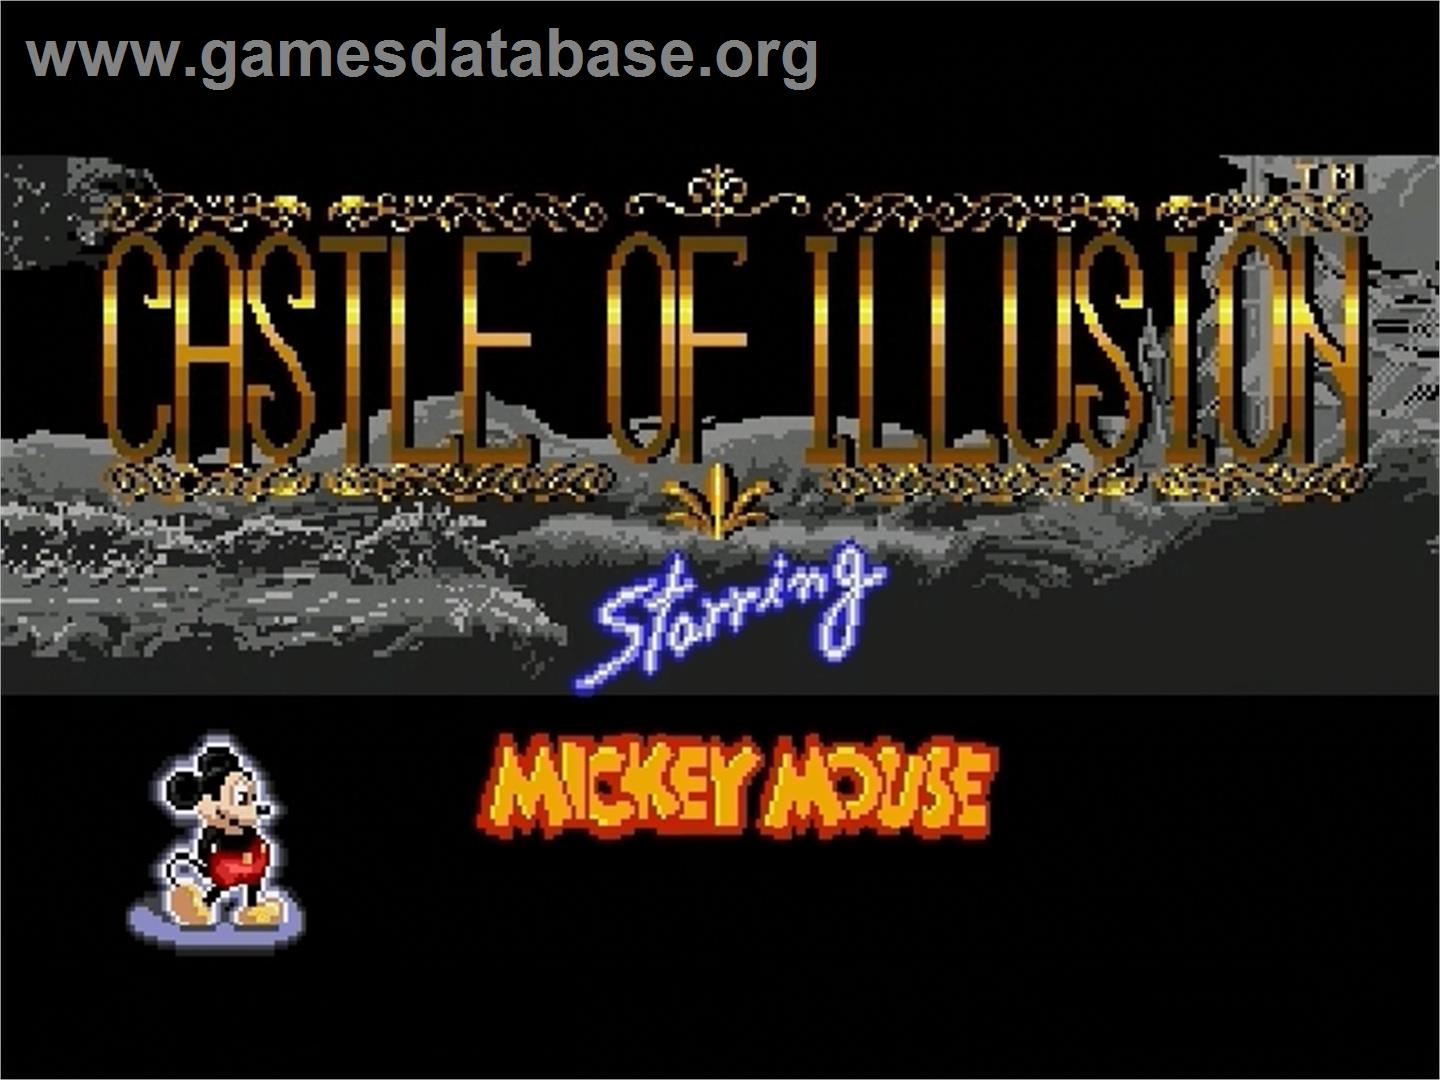 Castle of Illusion starring Mickey Mouse - Sega Genesis - Artwork - Title Screen